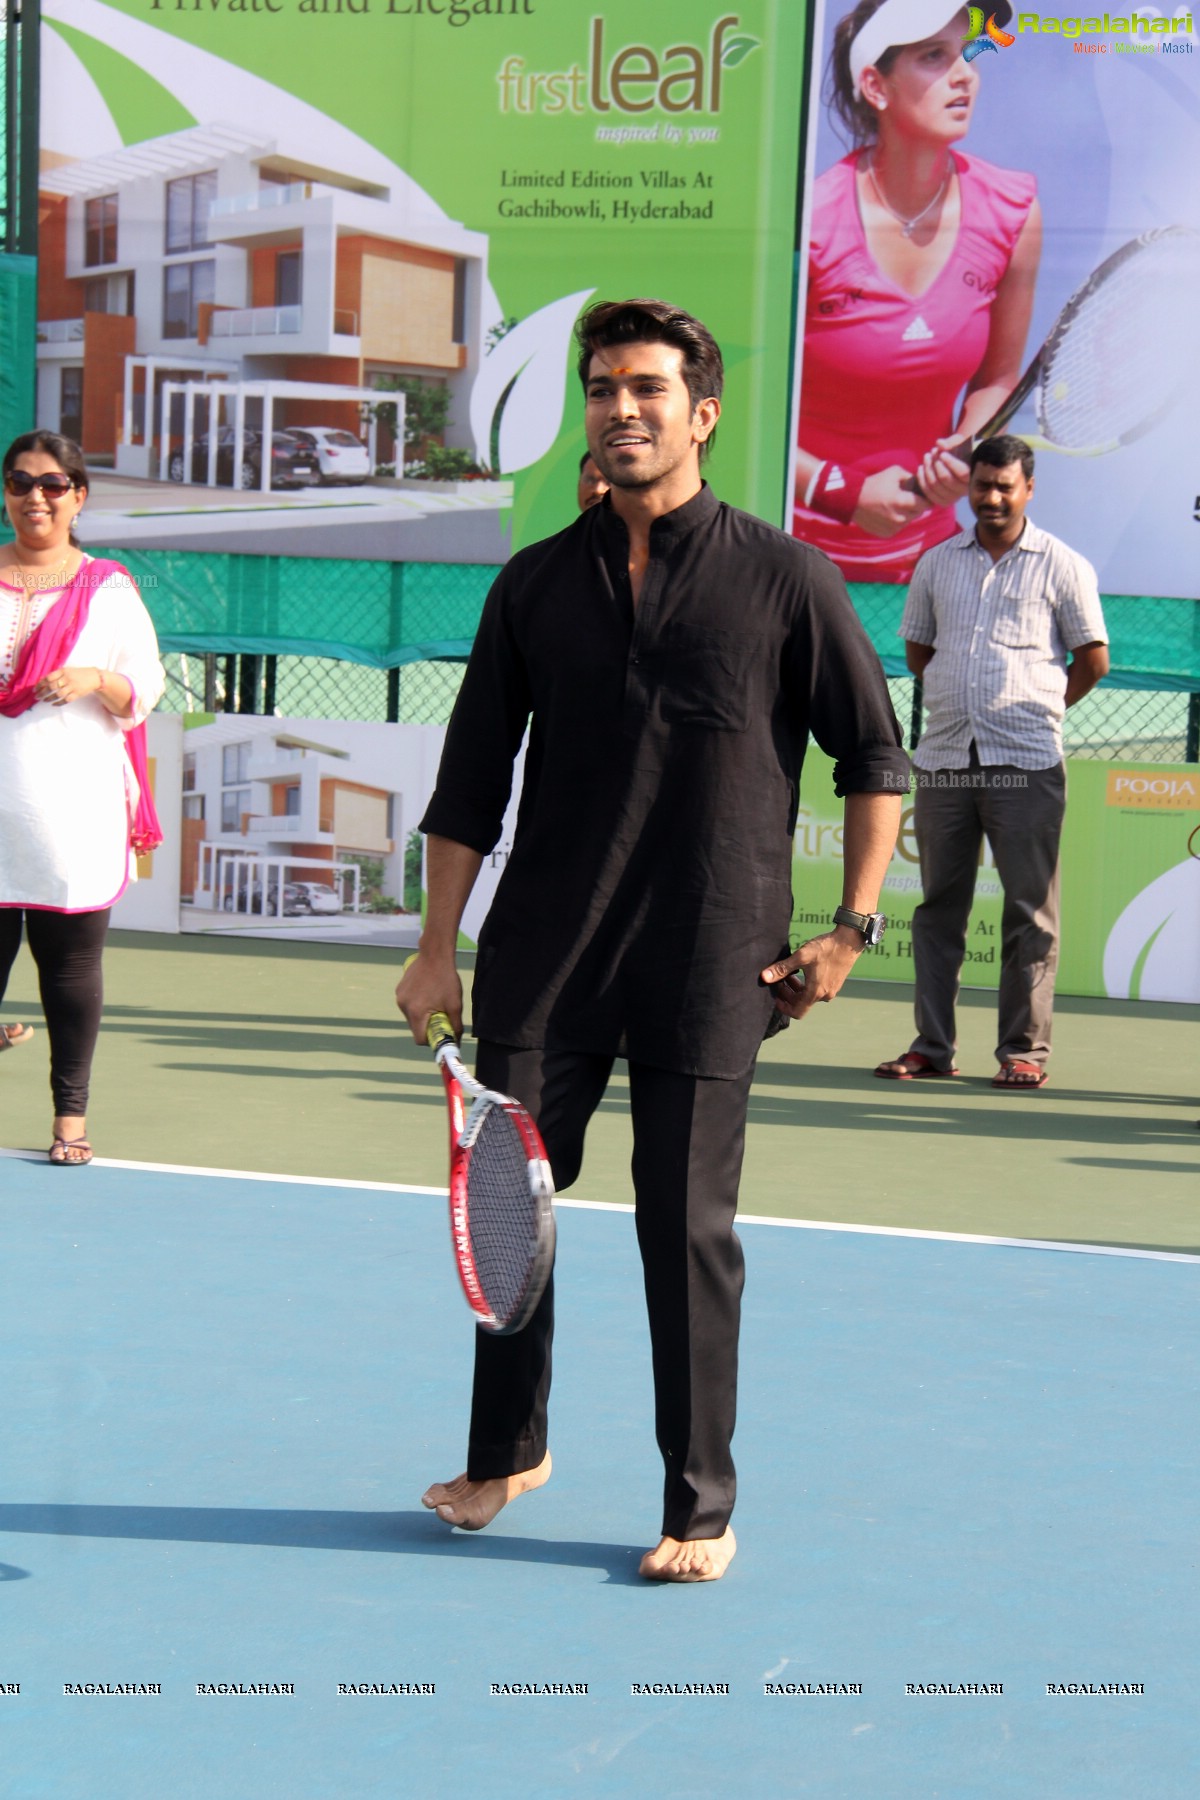 Ram Charan-Upasana inaugurates Pooja Ventures Women's Tennis Tournament